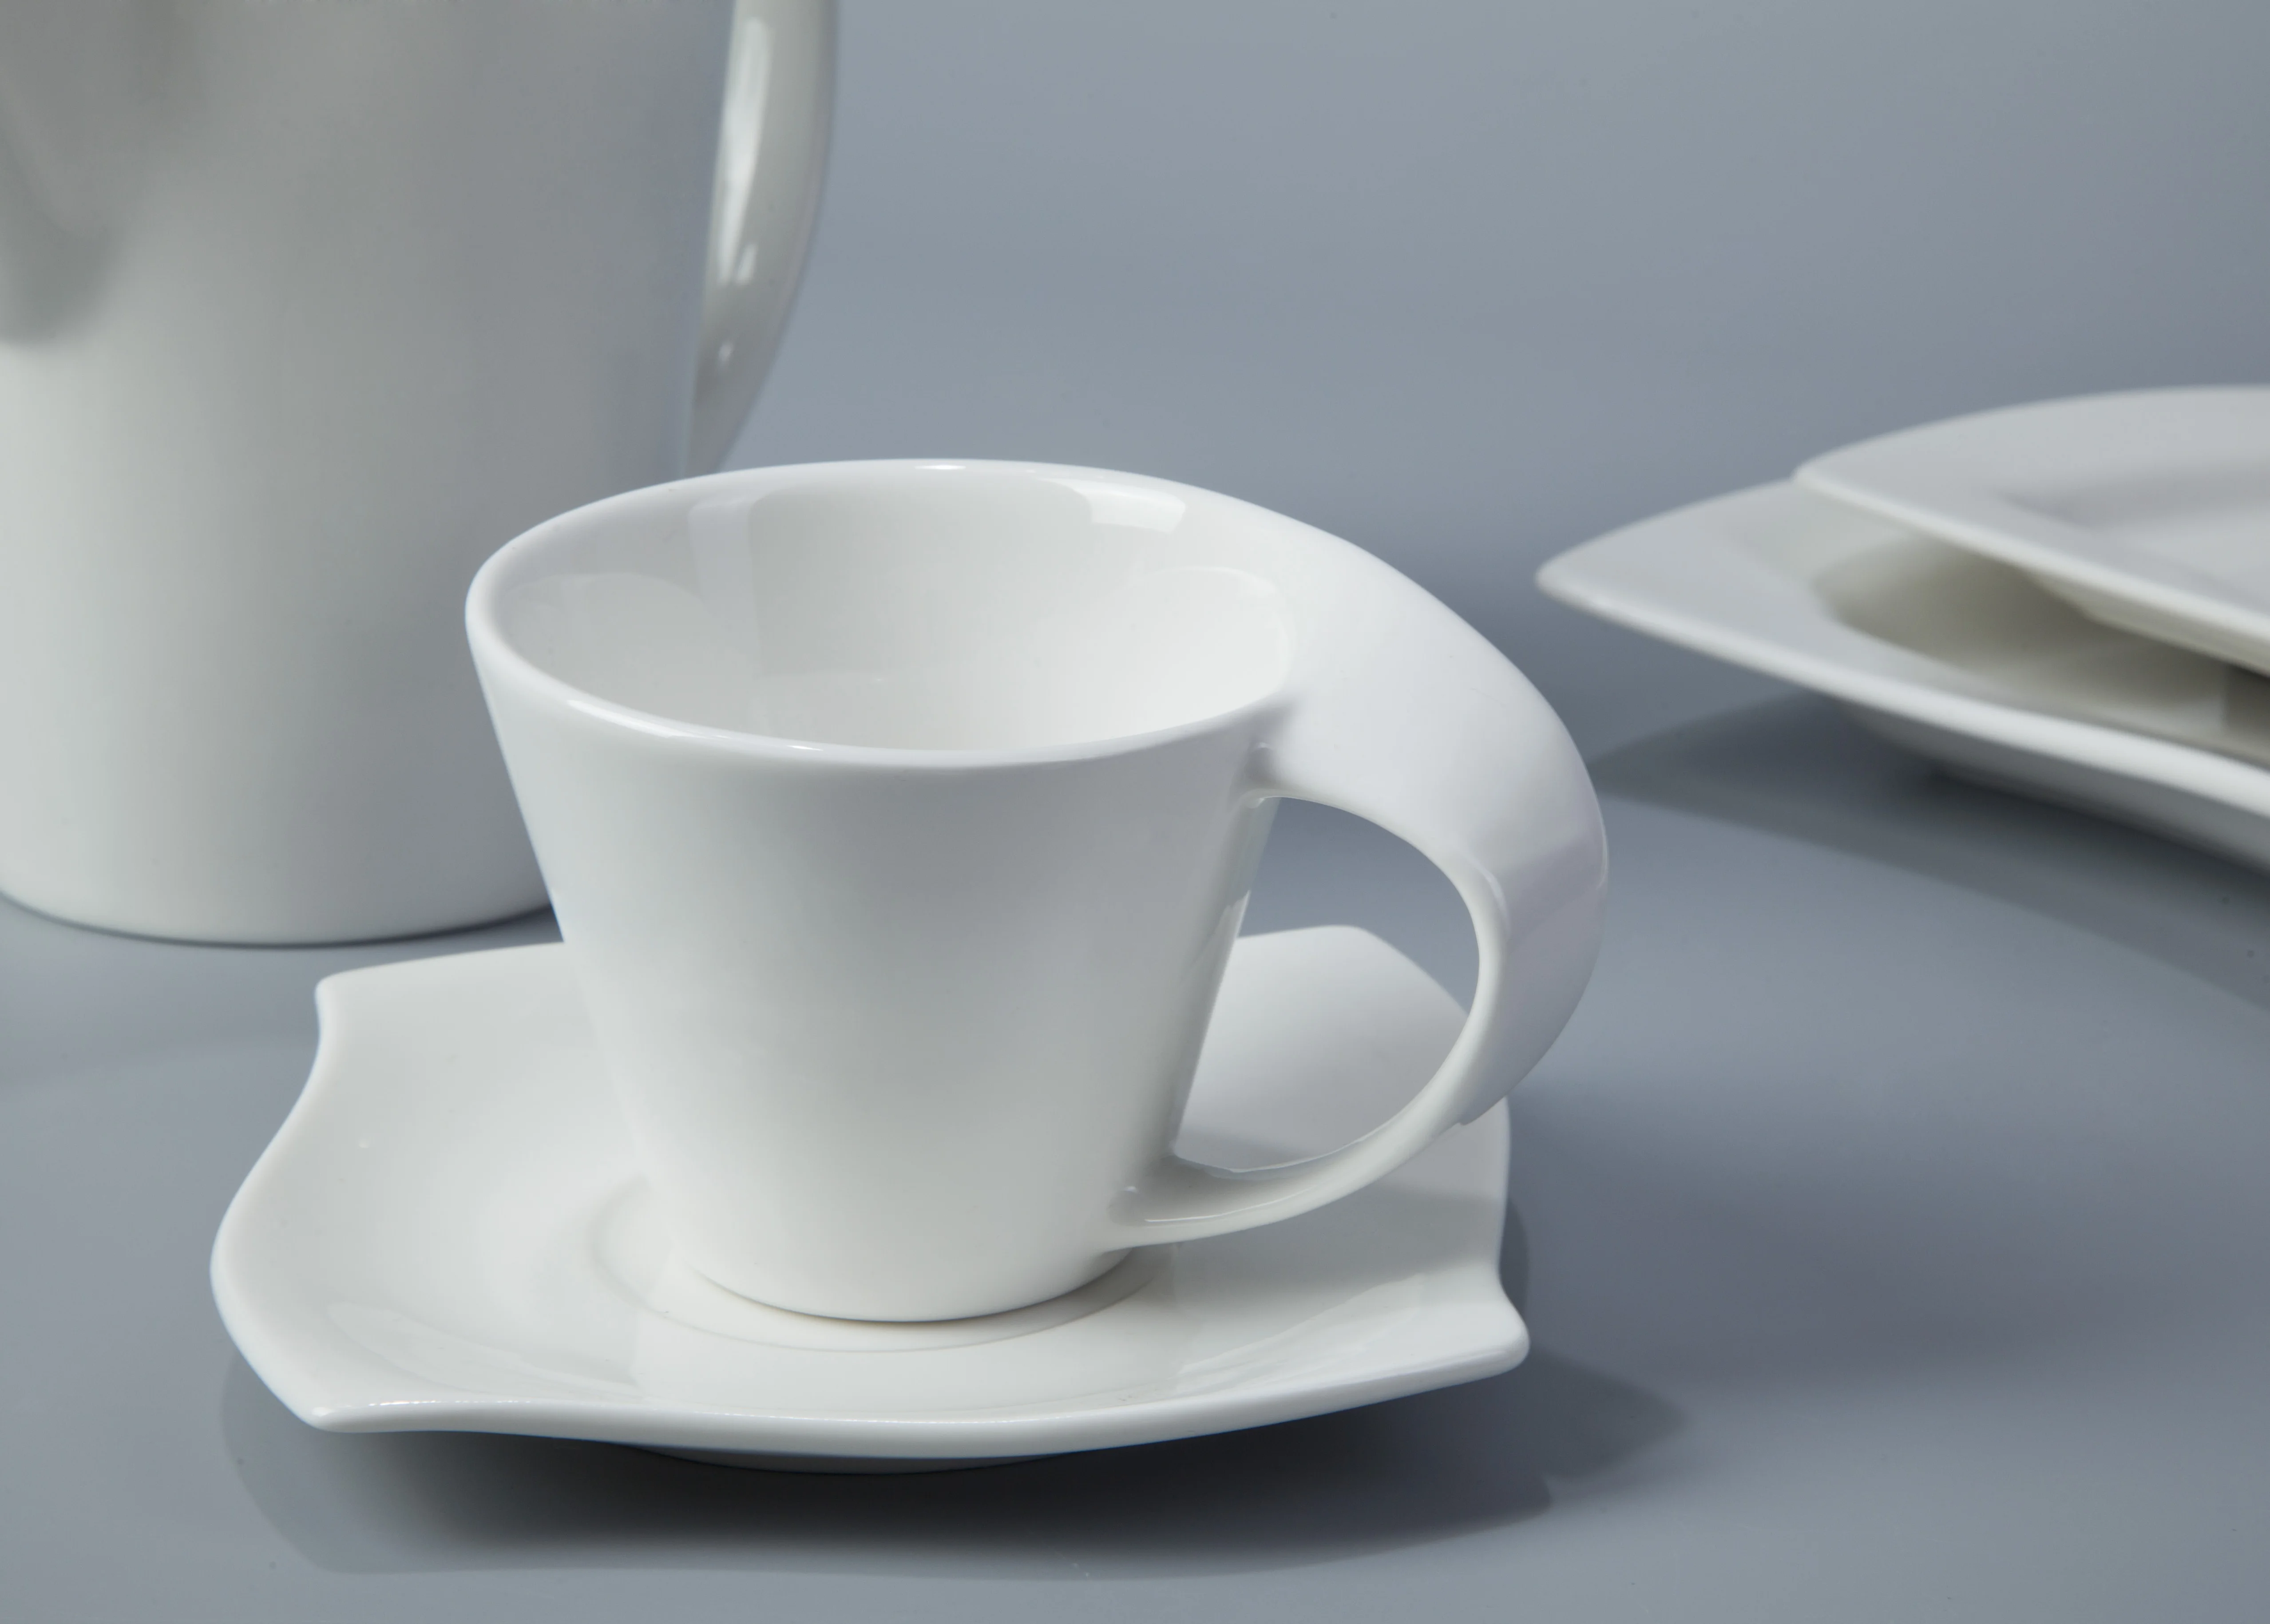 Hotel Tableware Set , Ceramics Porcelain Tableware , Halloween Tableware